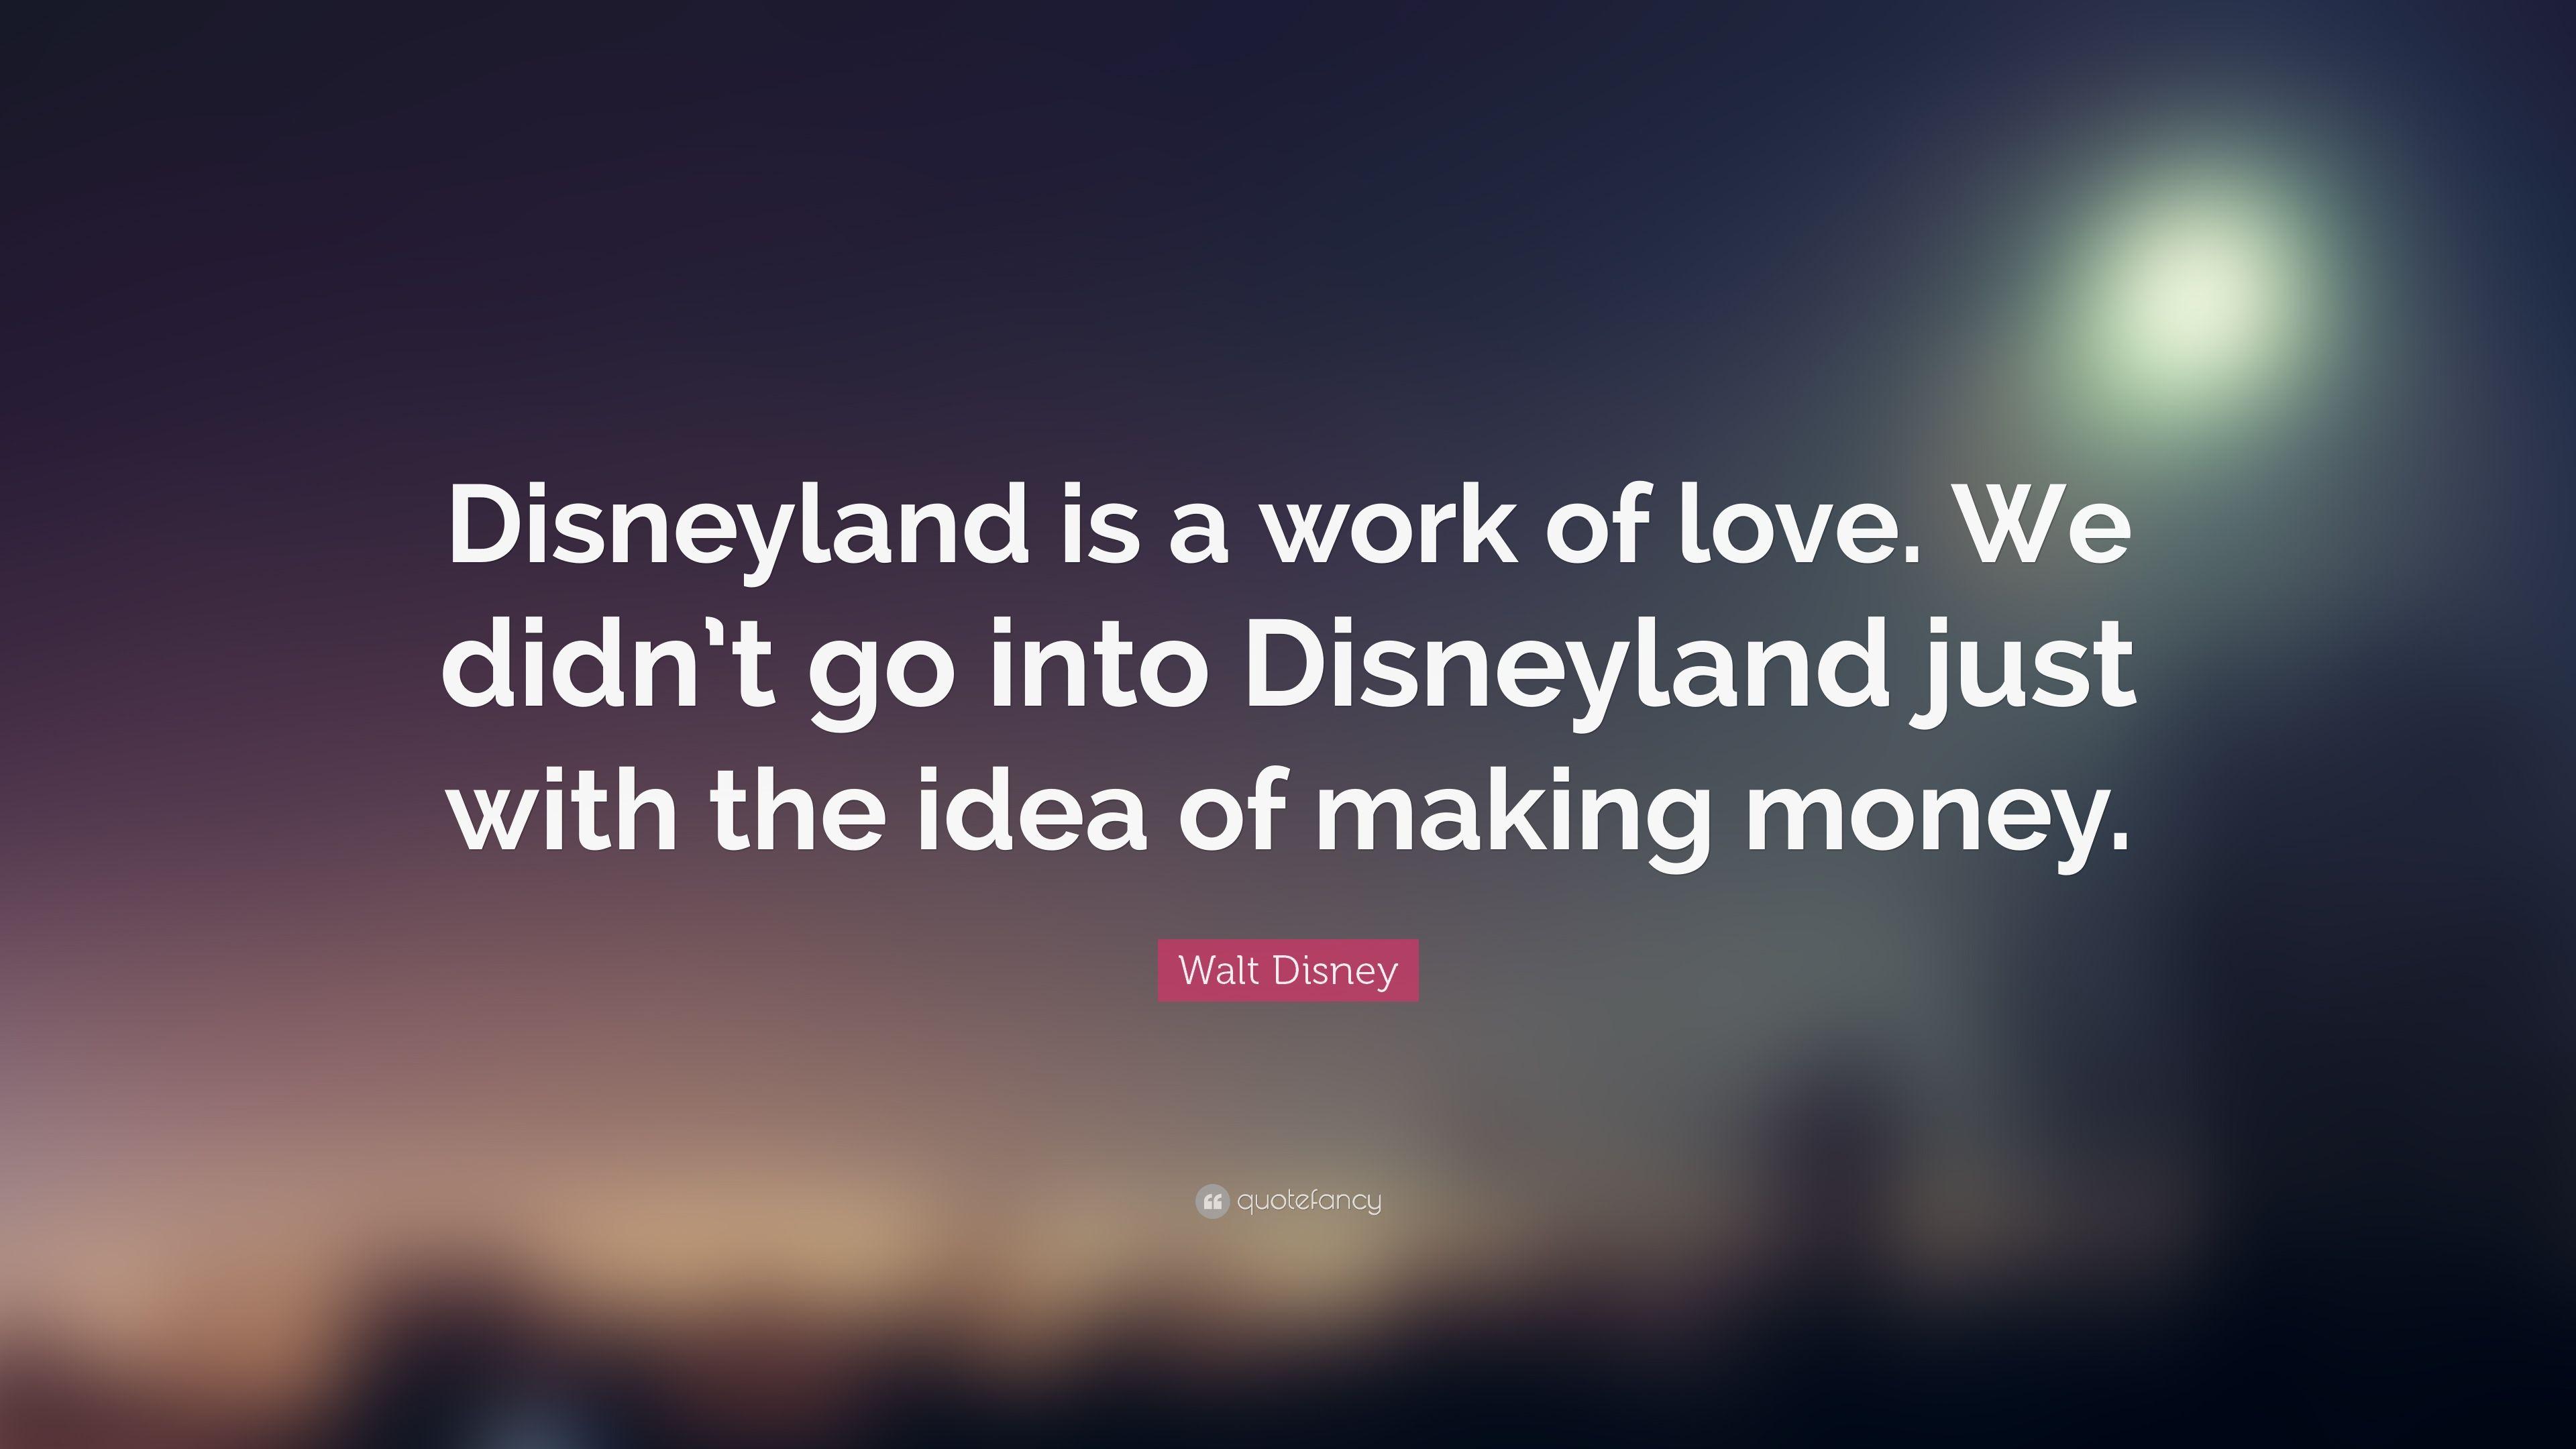 Walt Disney Quote: “Disneyland is a work of love. We didn't go into